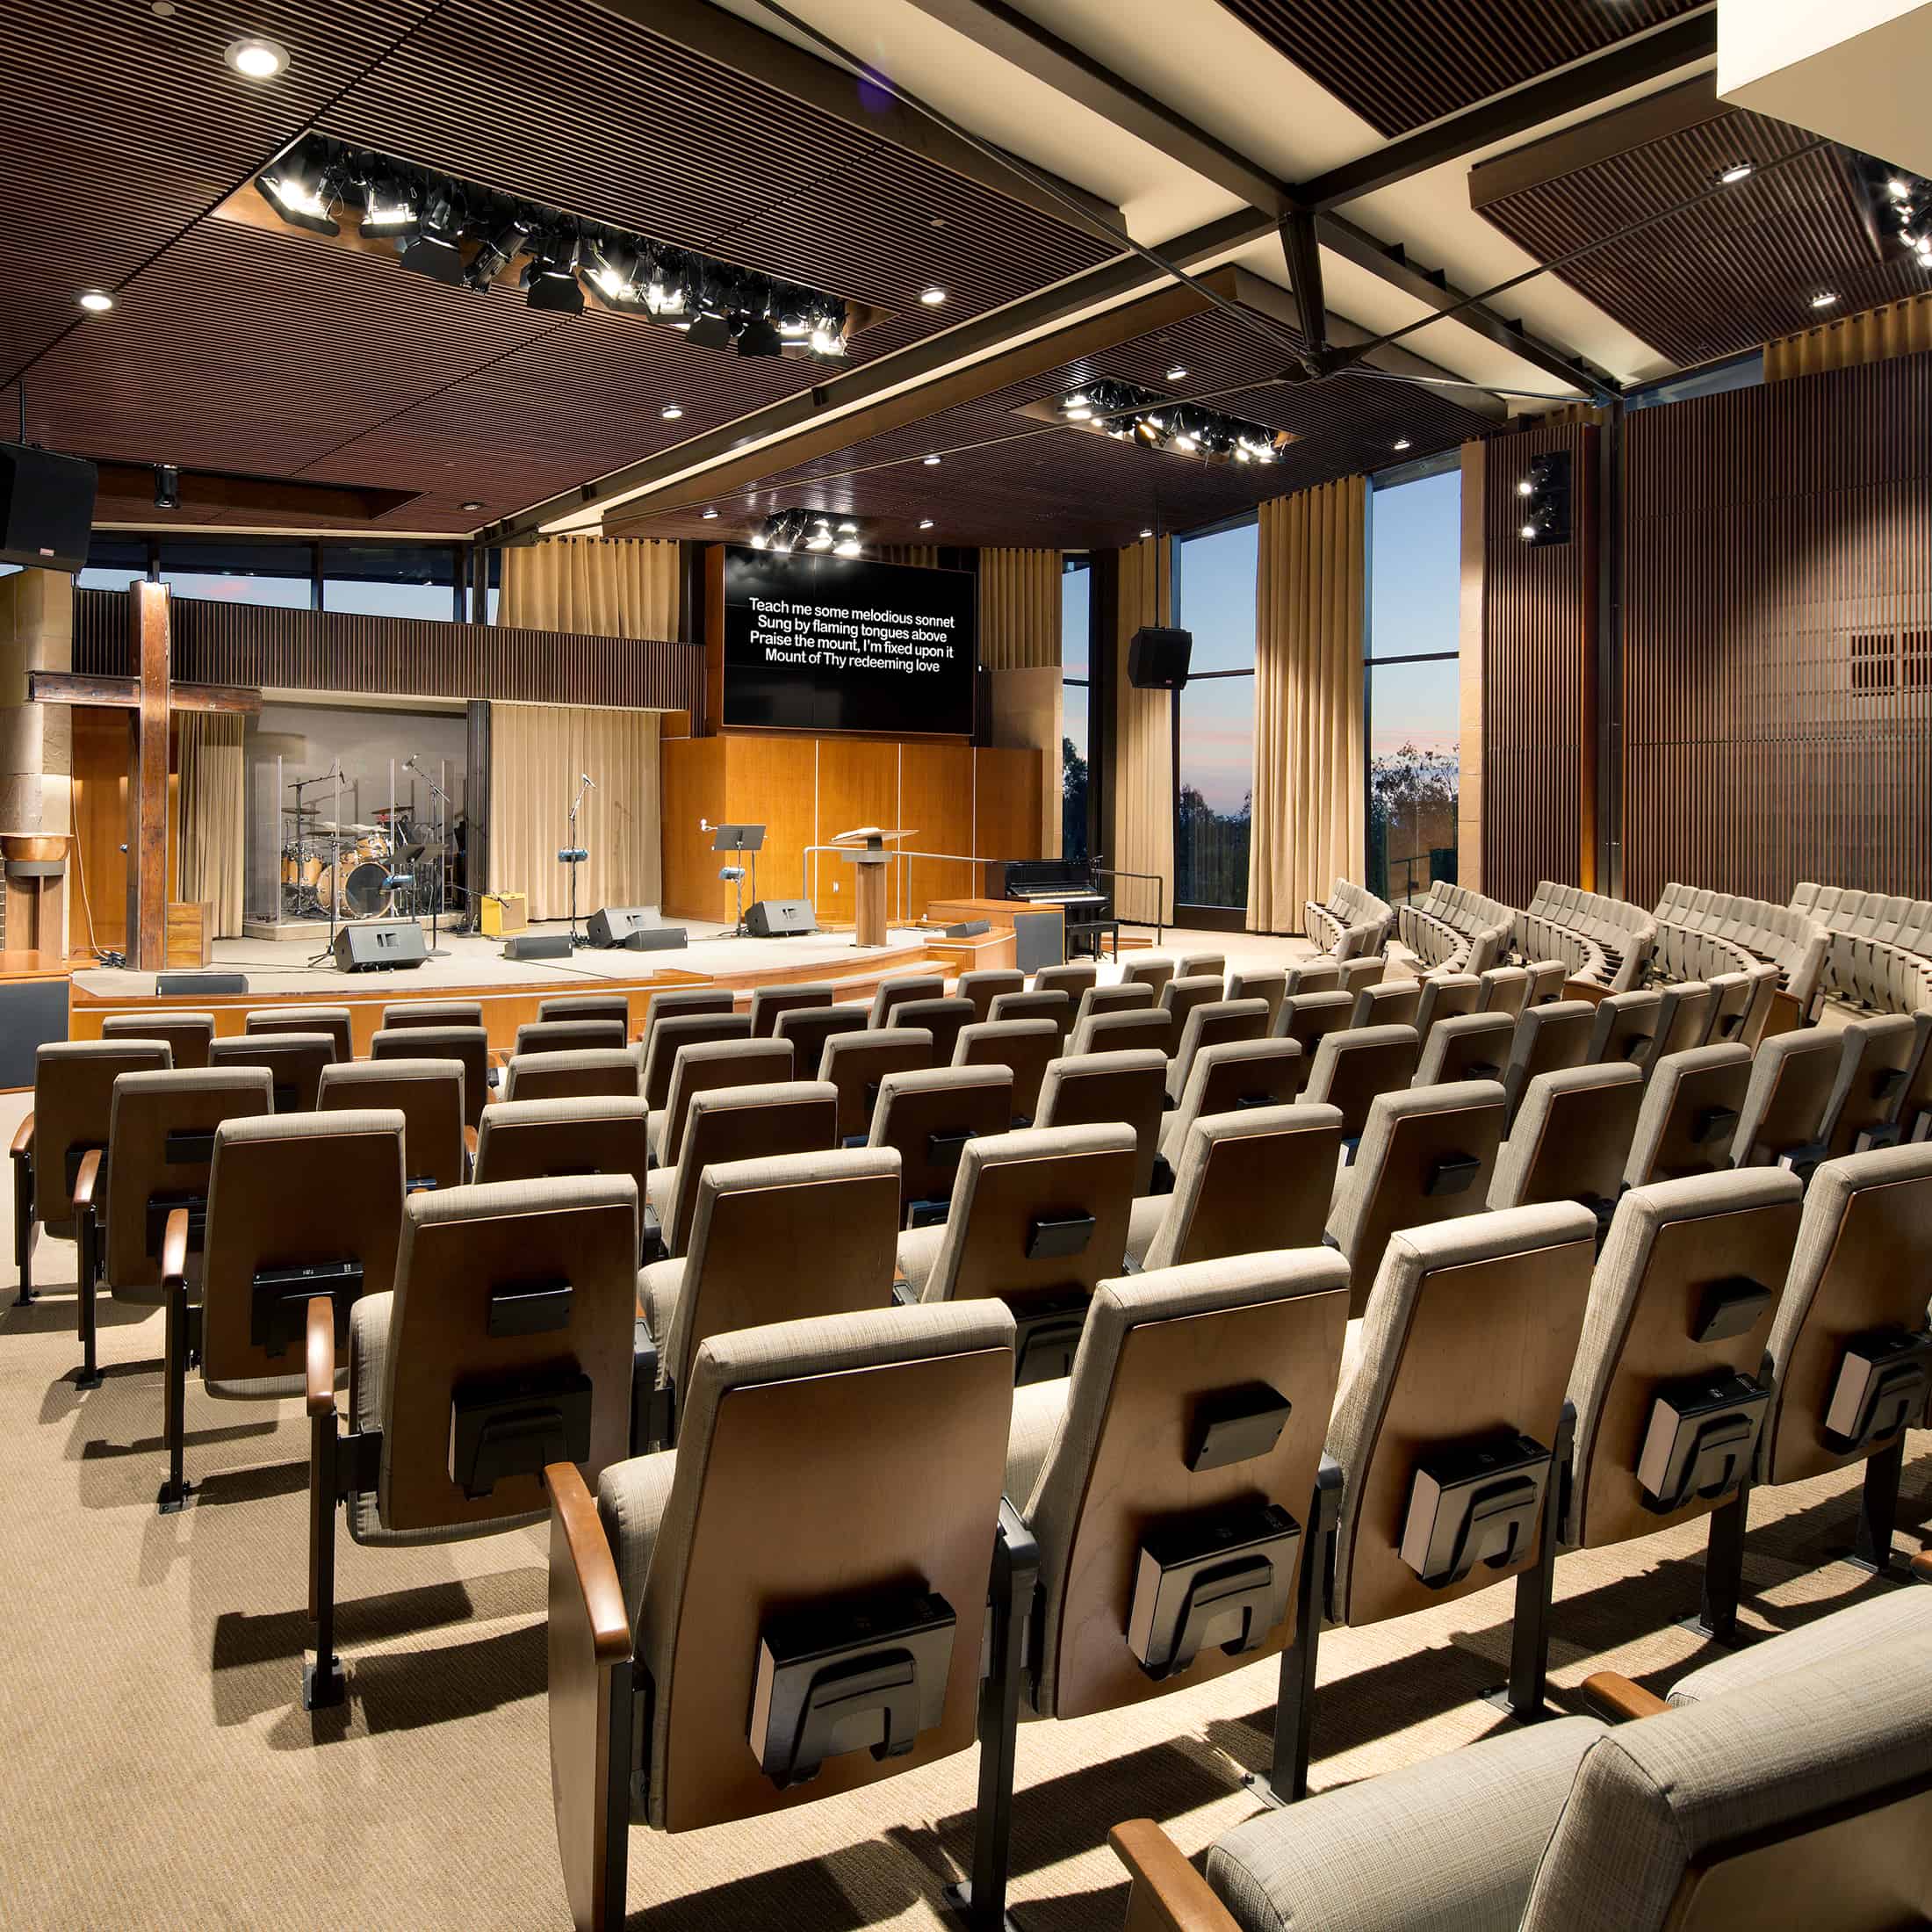 Interior of Clarity Auditorium Seating inside Malibu Presbyterian Church located in Malibu, CA